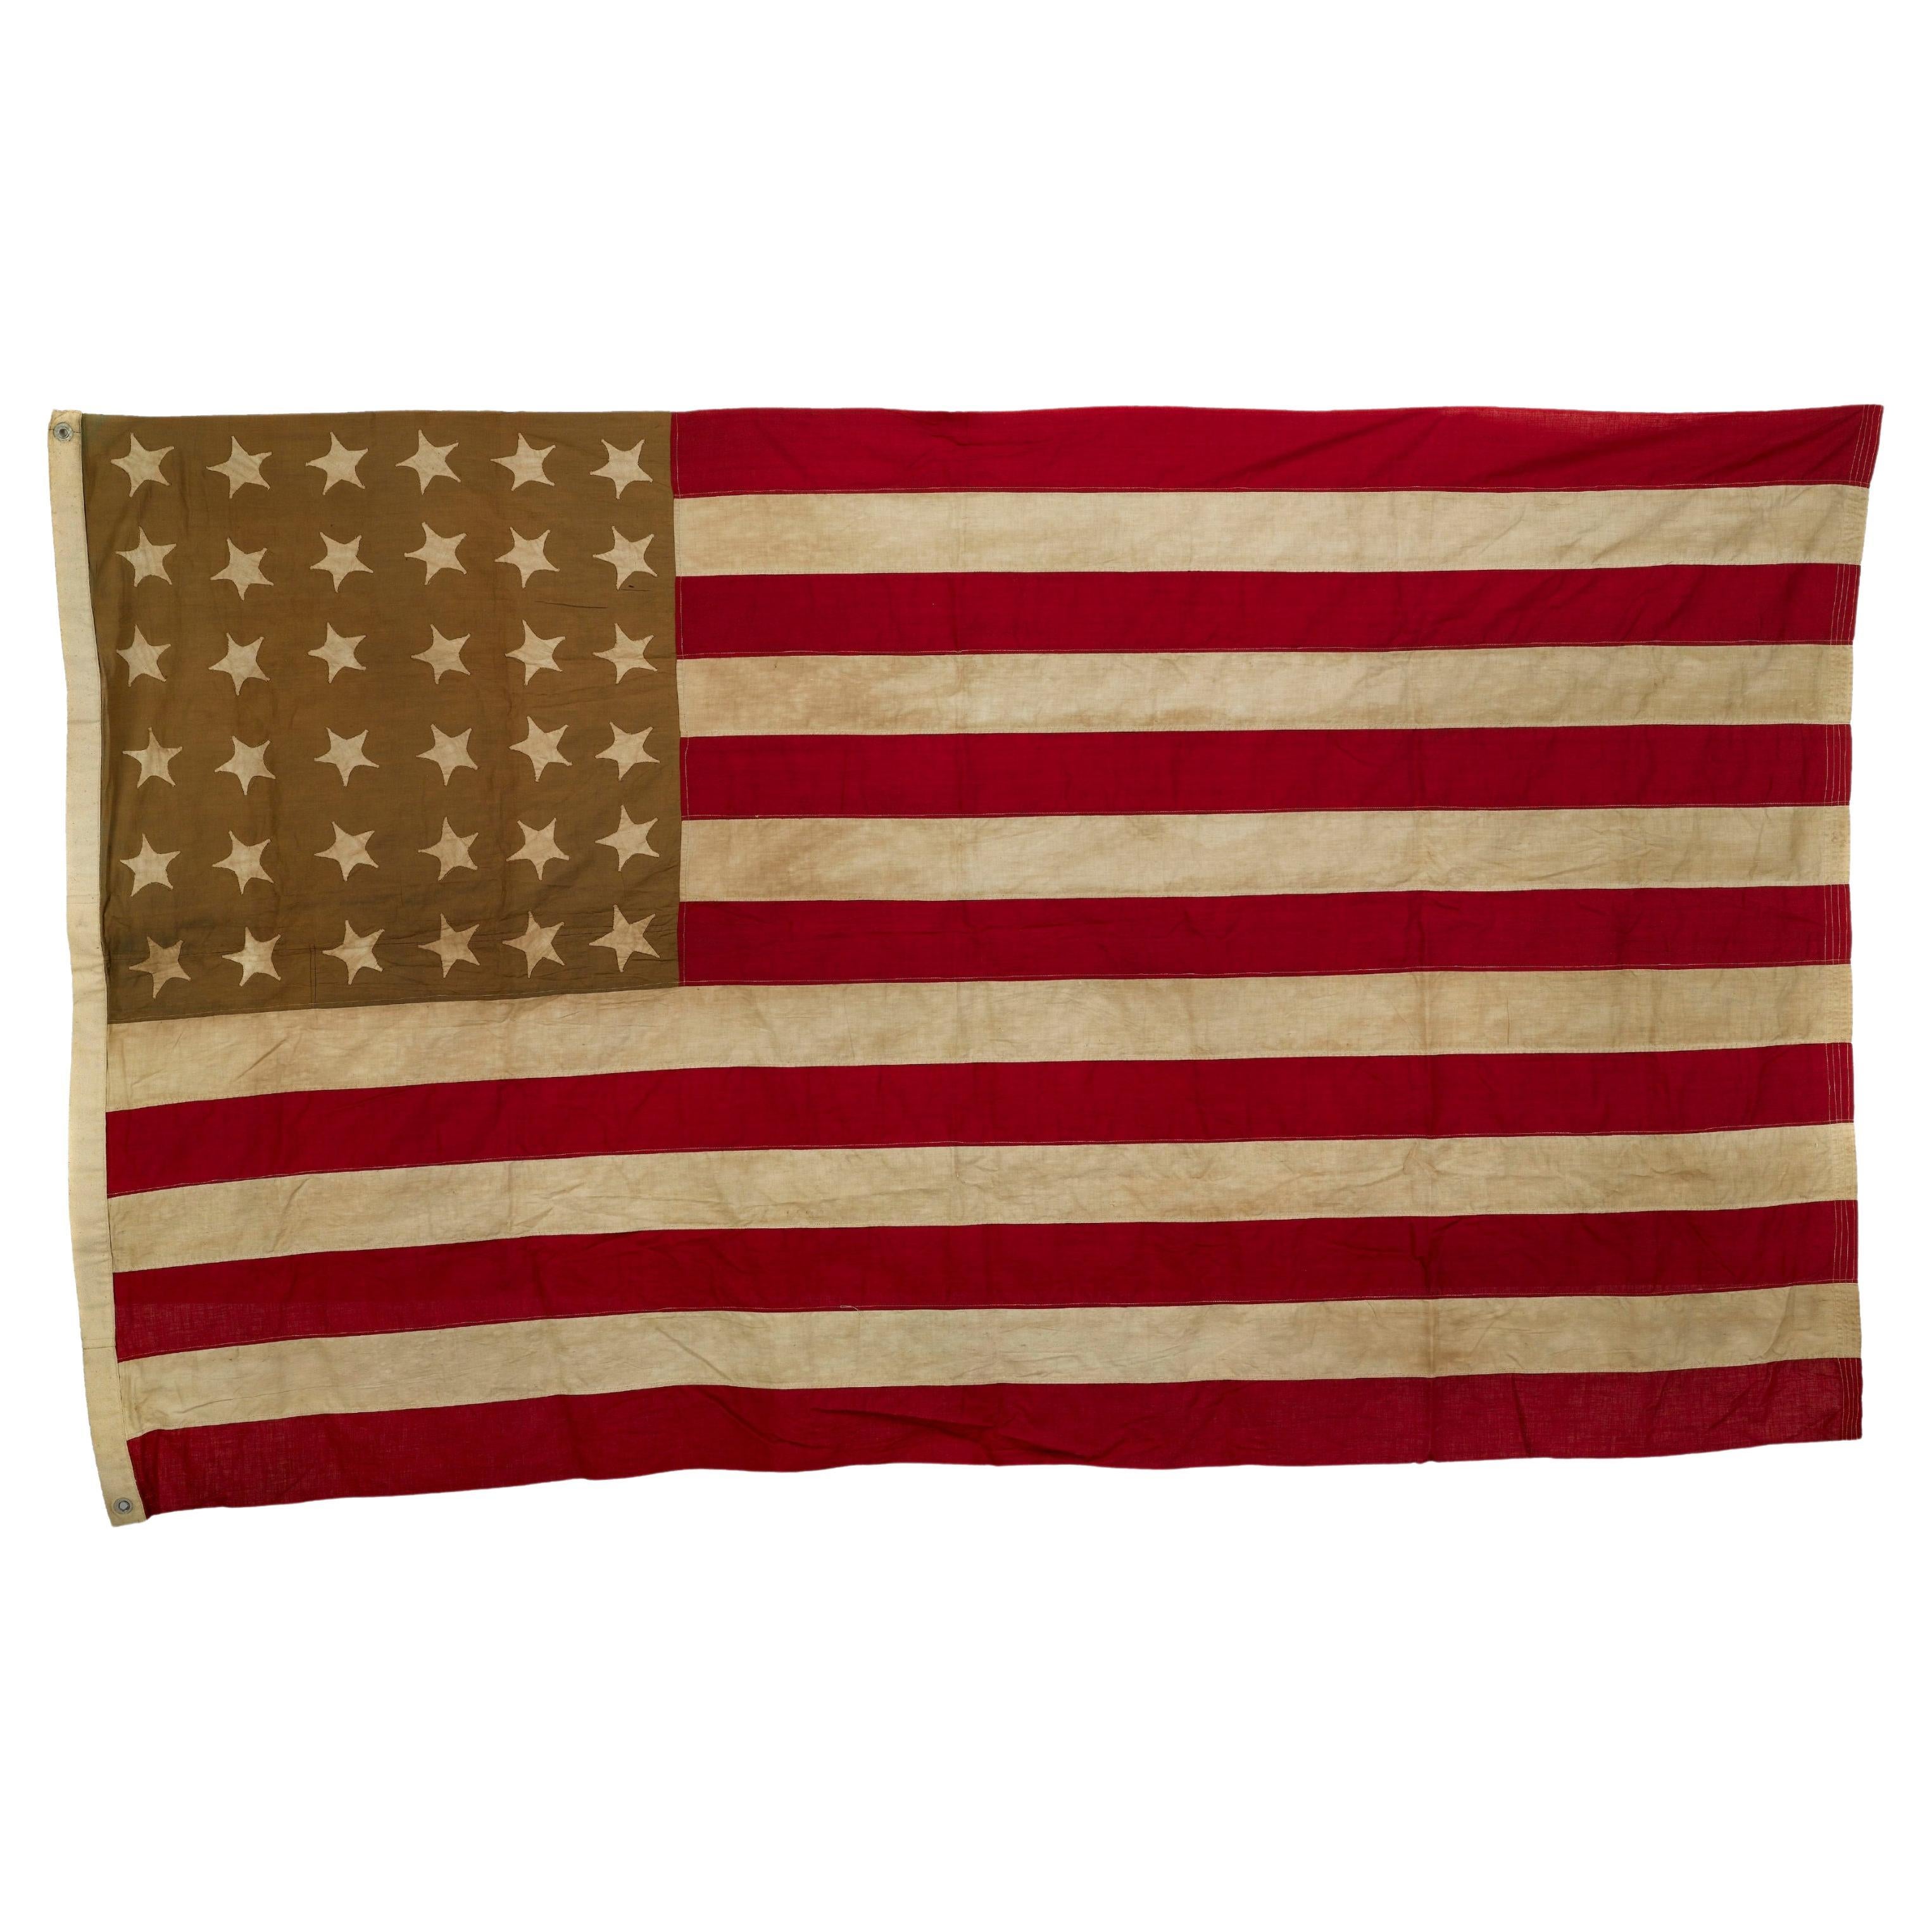 union flag during civil war